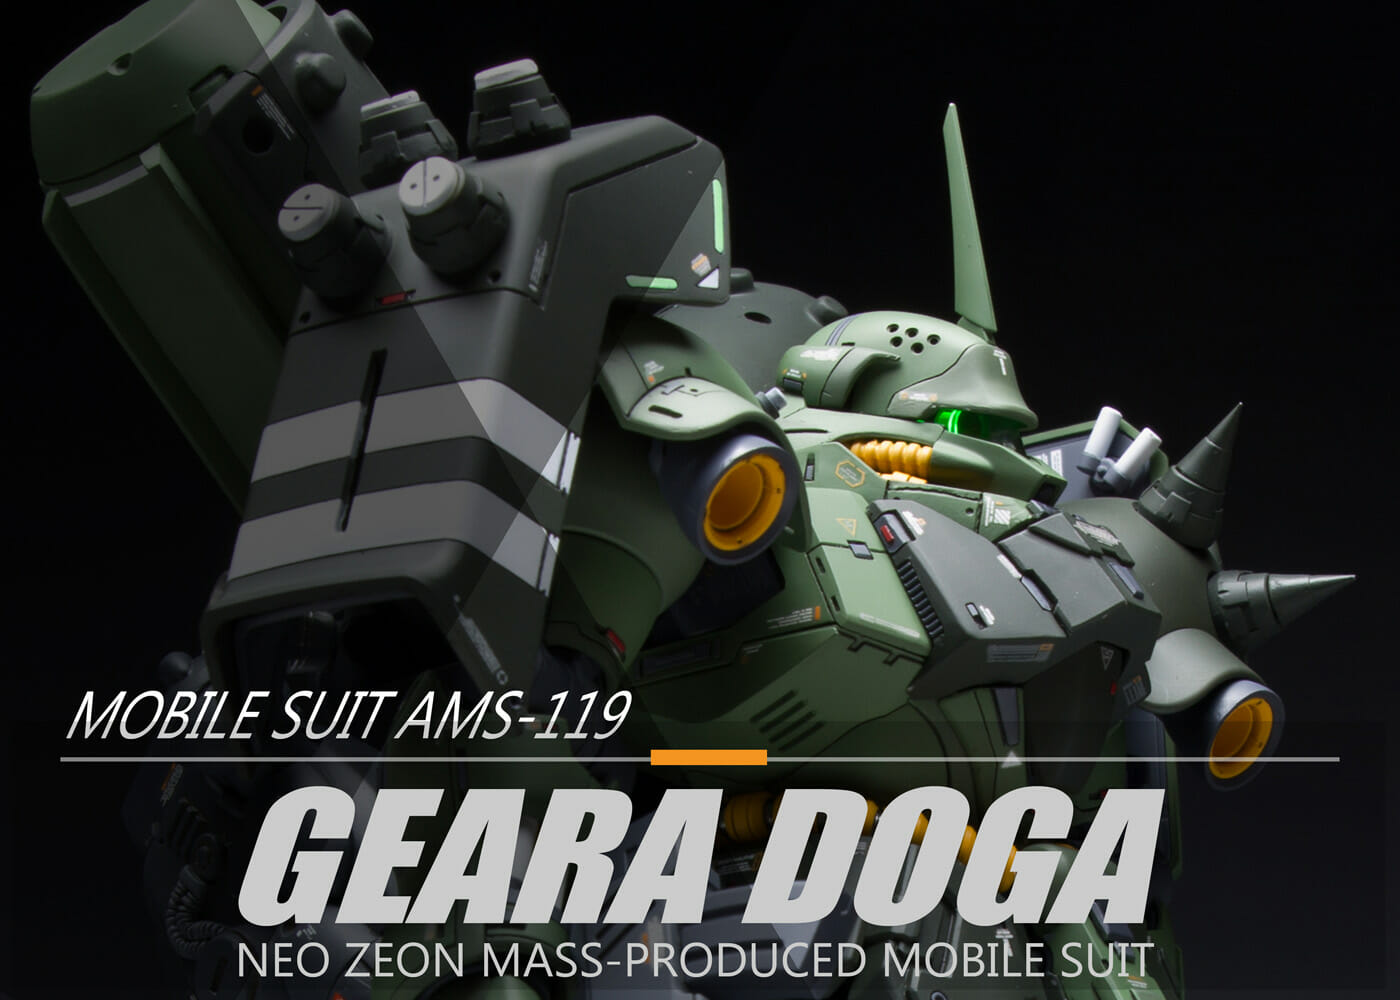 MG 171 Ams-119 Geara DOGA Gundam 1/100 Plastic Model Kit Bandai for sale online 